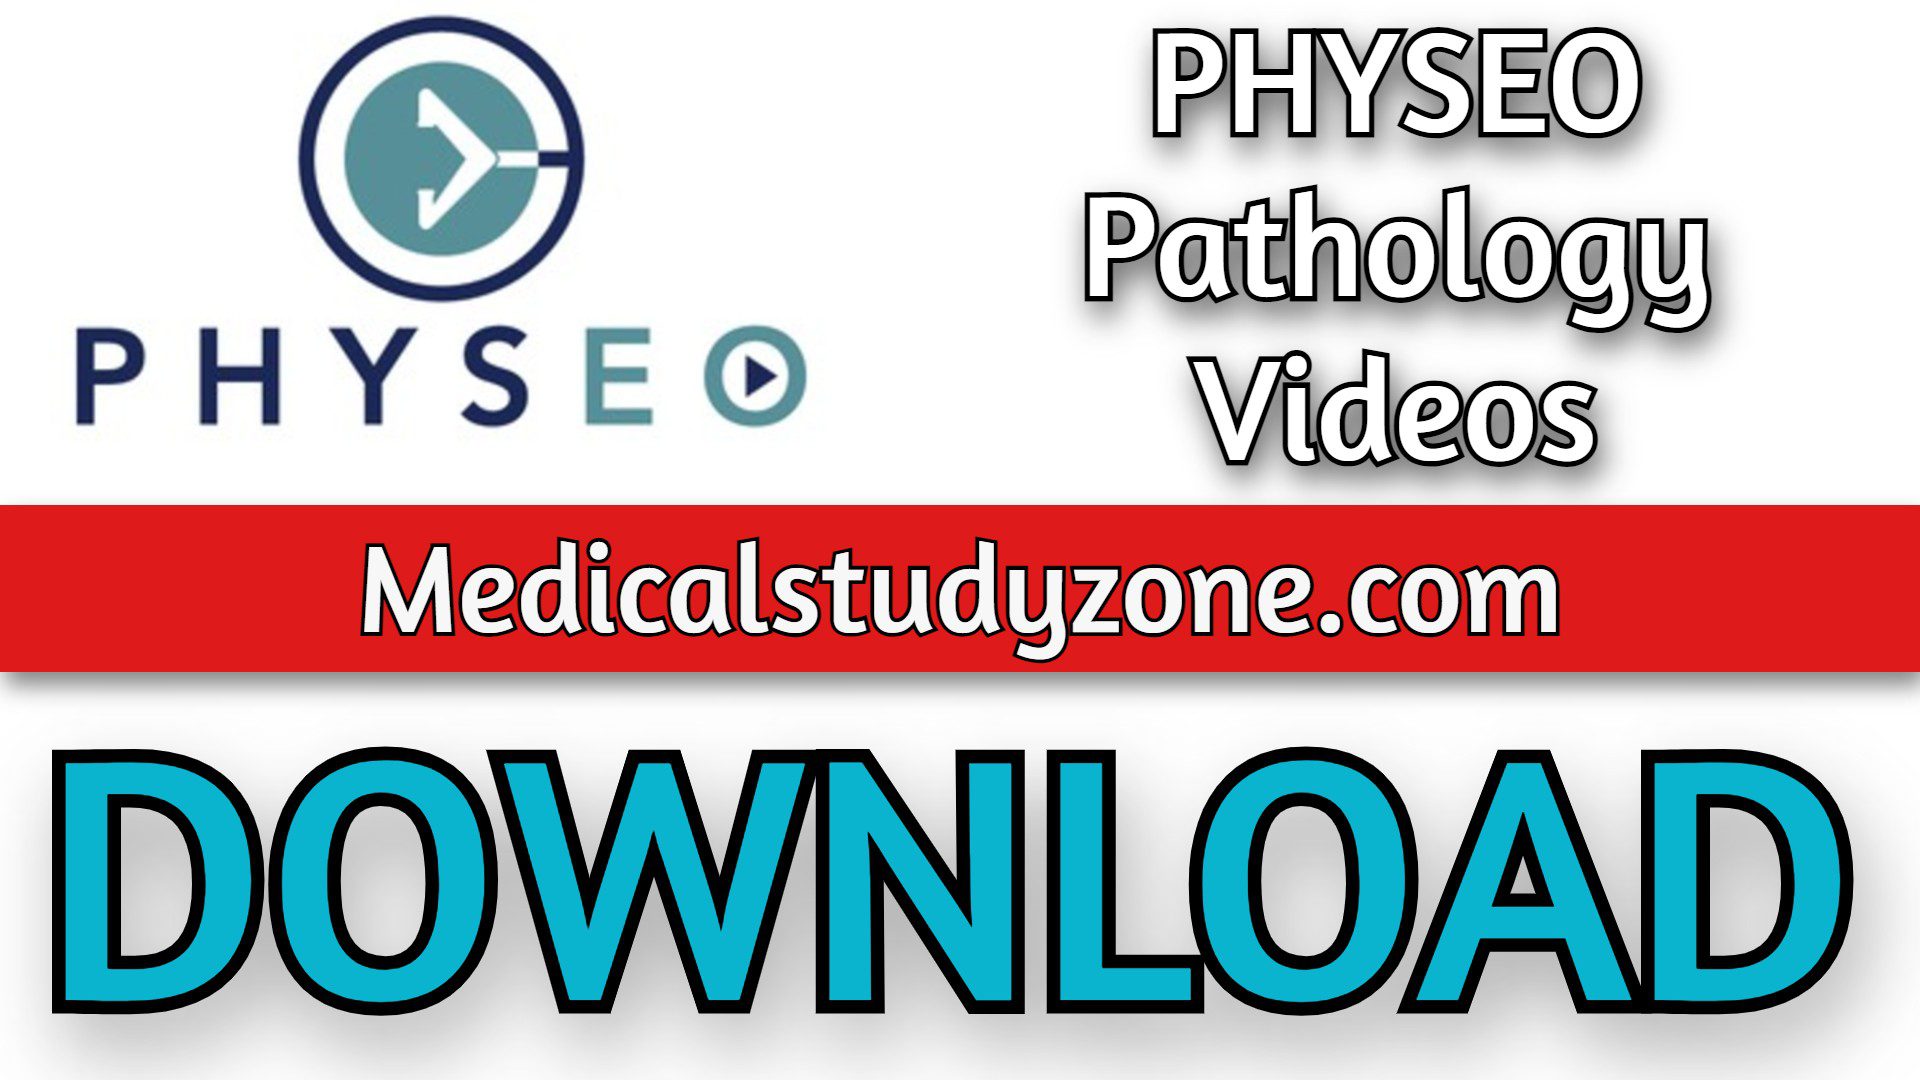 PHYSEO Pathology Videos 2022 Free Download